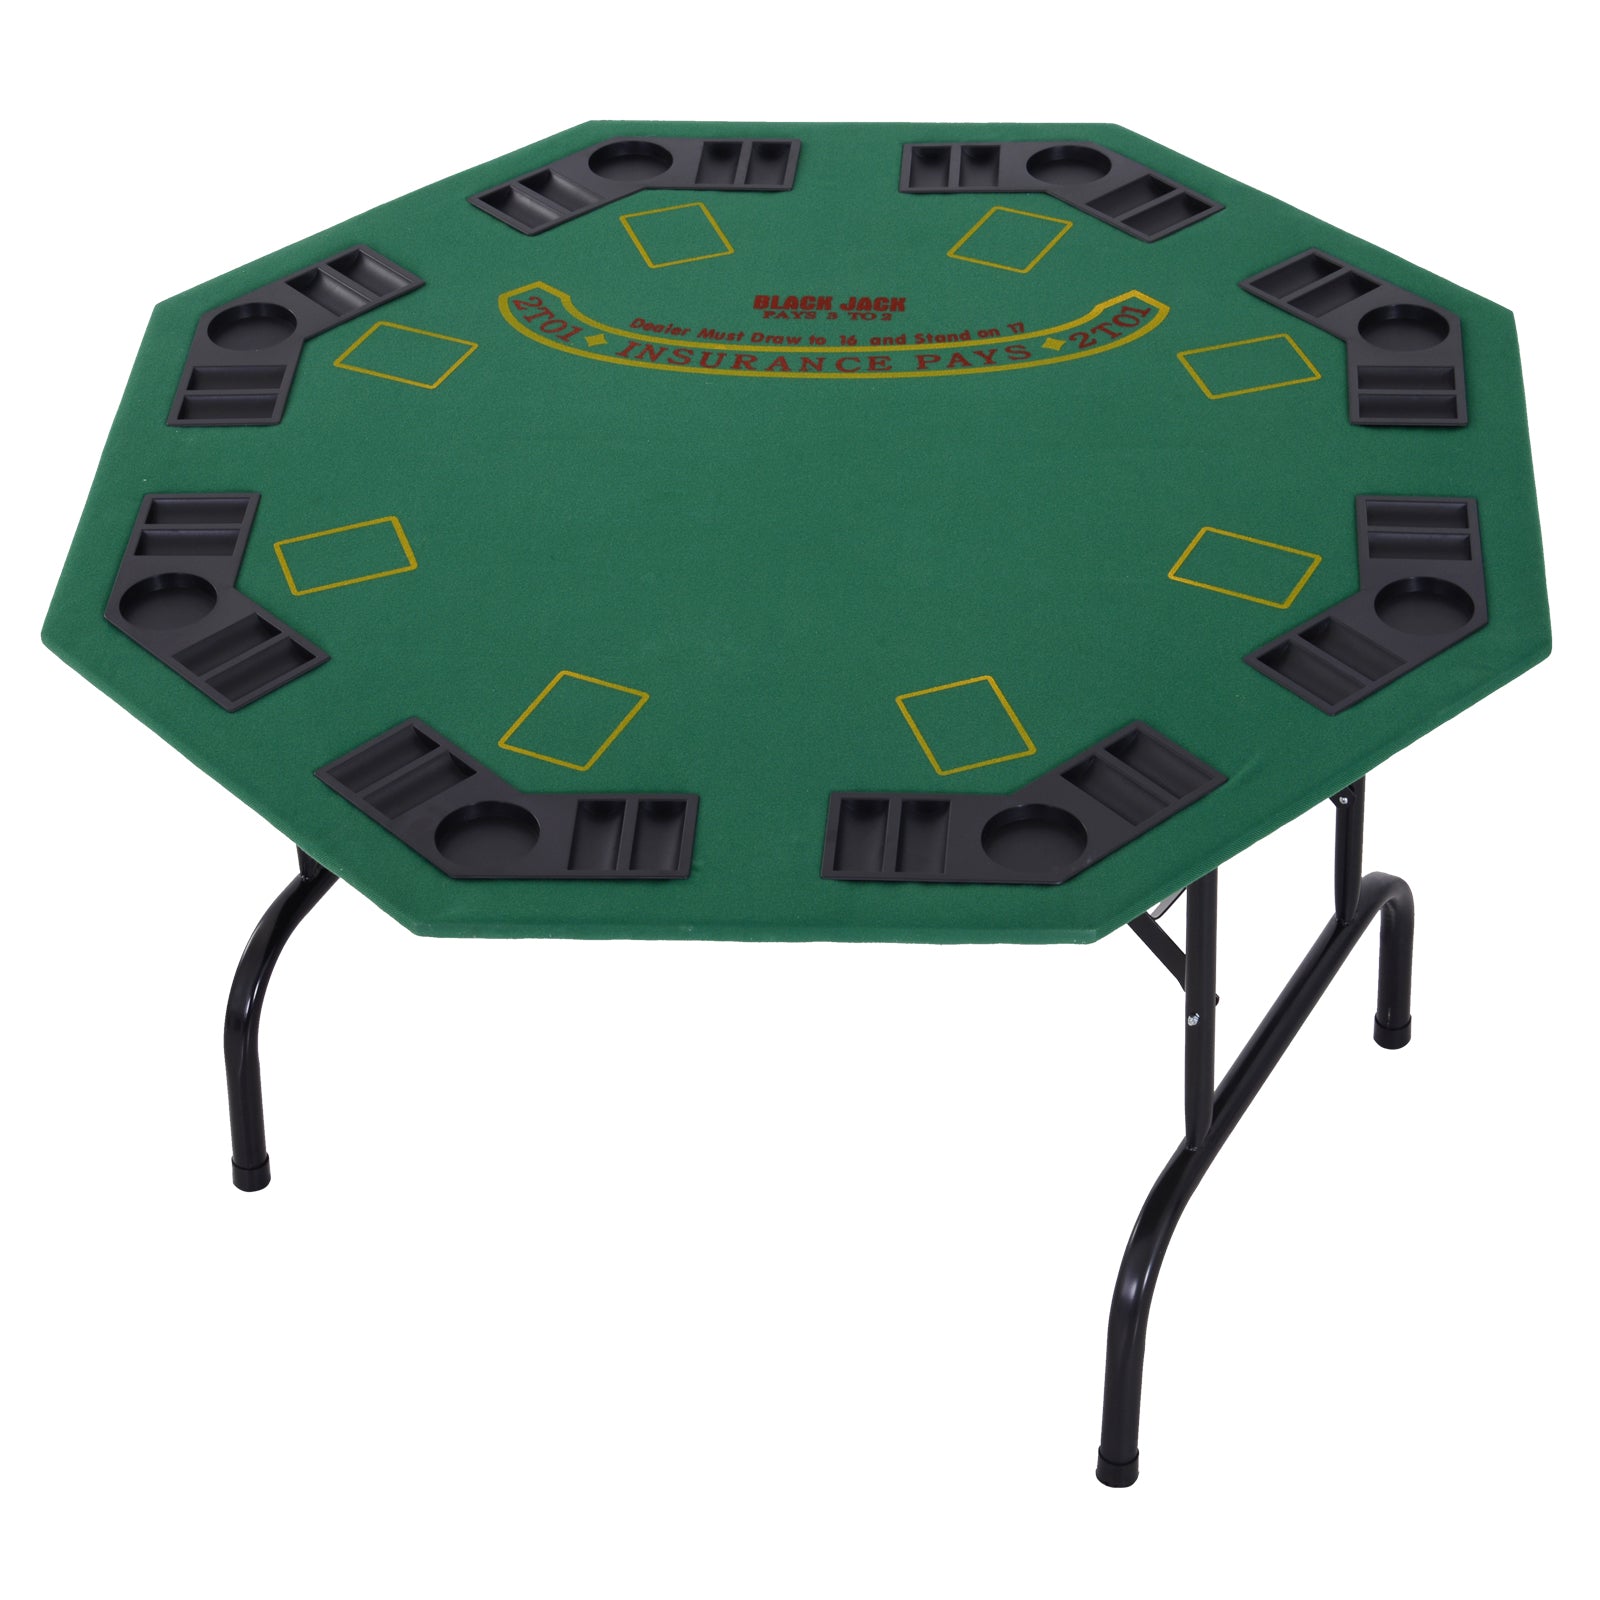 HOMCOM 8 Player Folding Games Poker Table Chip Cup Holder Steel Base Felt Green  | TJ Hughes